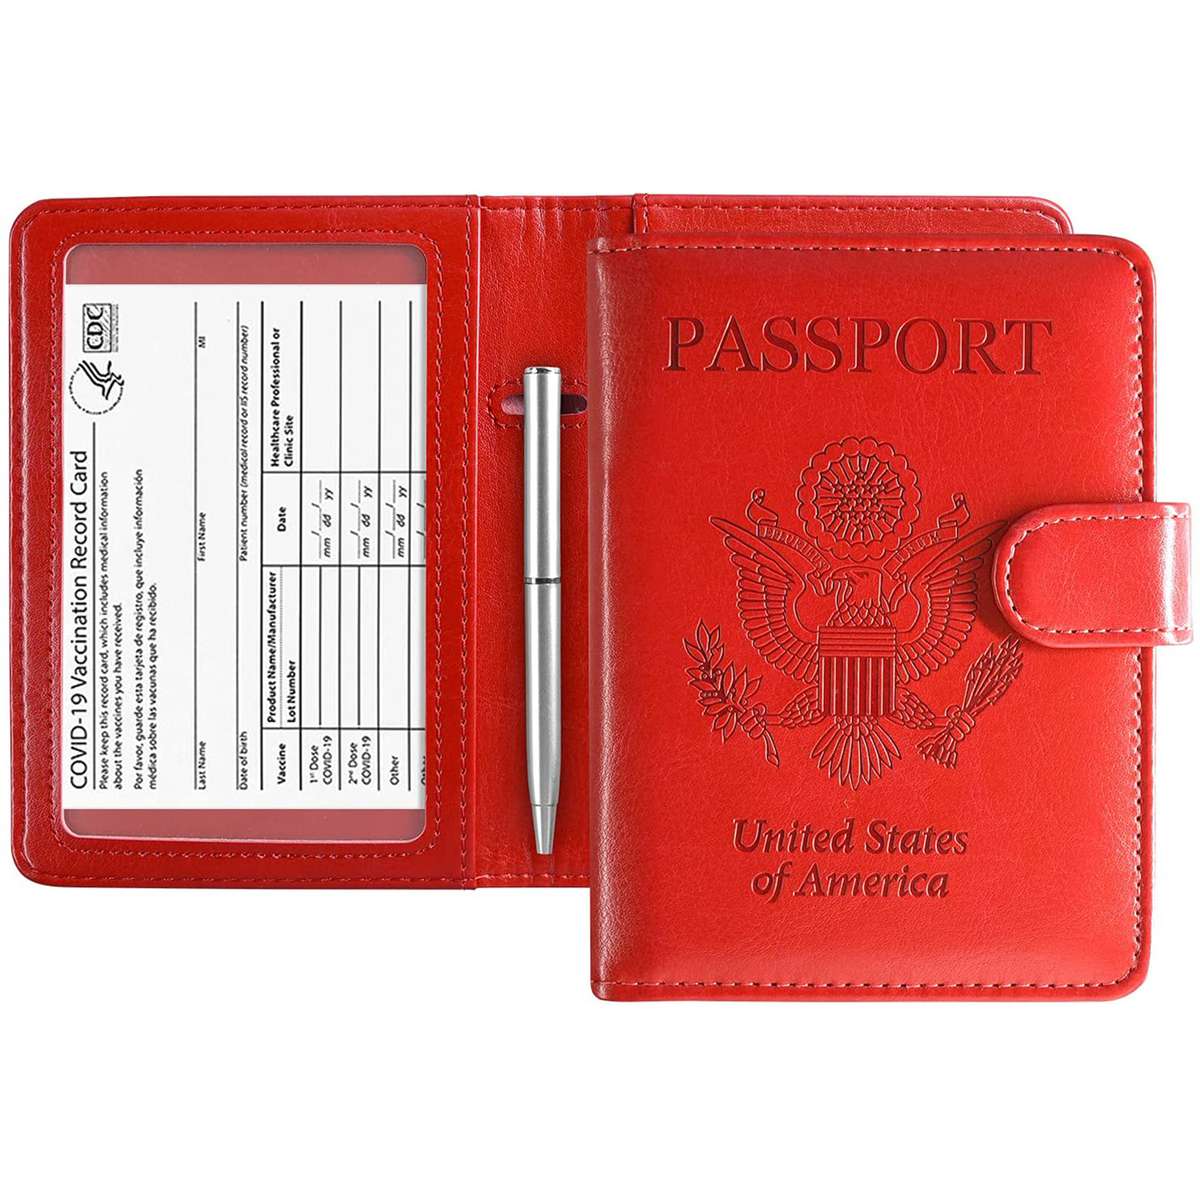 Black Passport and Vaccine Card Holder Combo,pu Leather Passport and Vaccine Card Holder,Passport Holder Travel Wallet documents Organizer